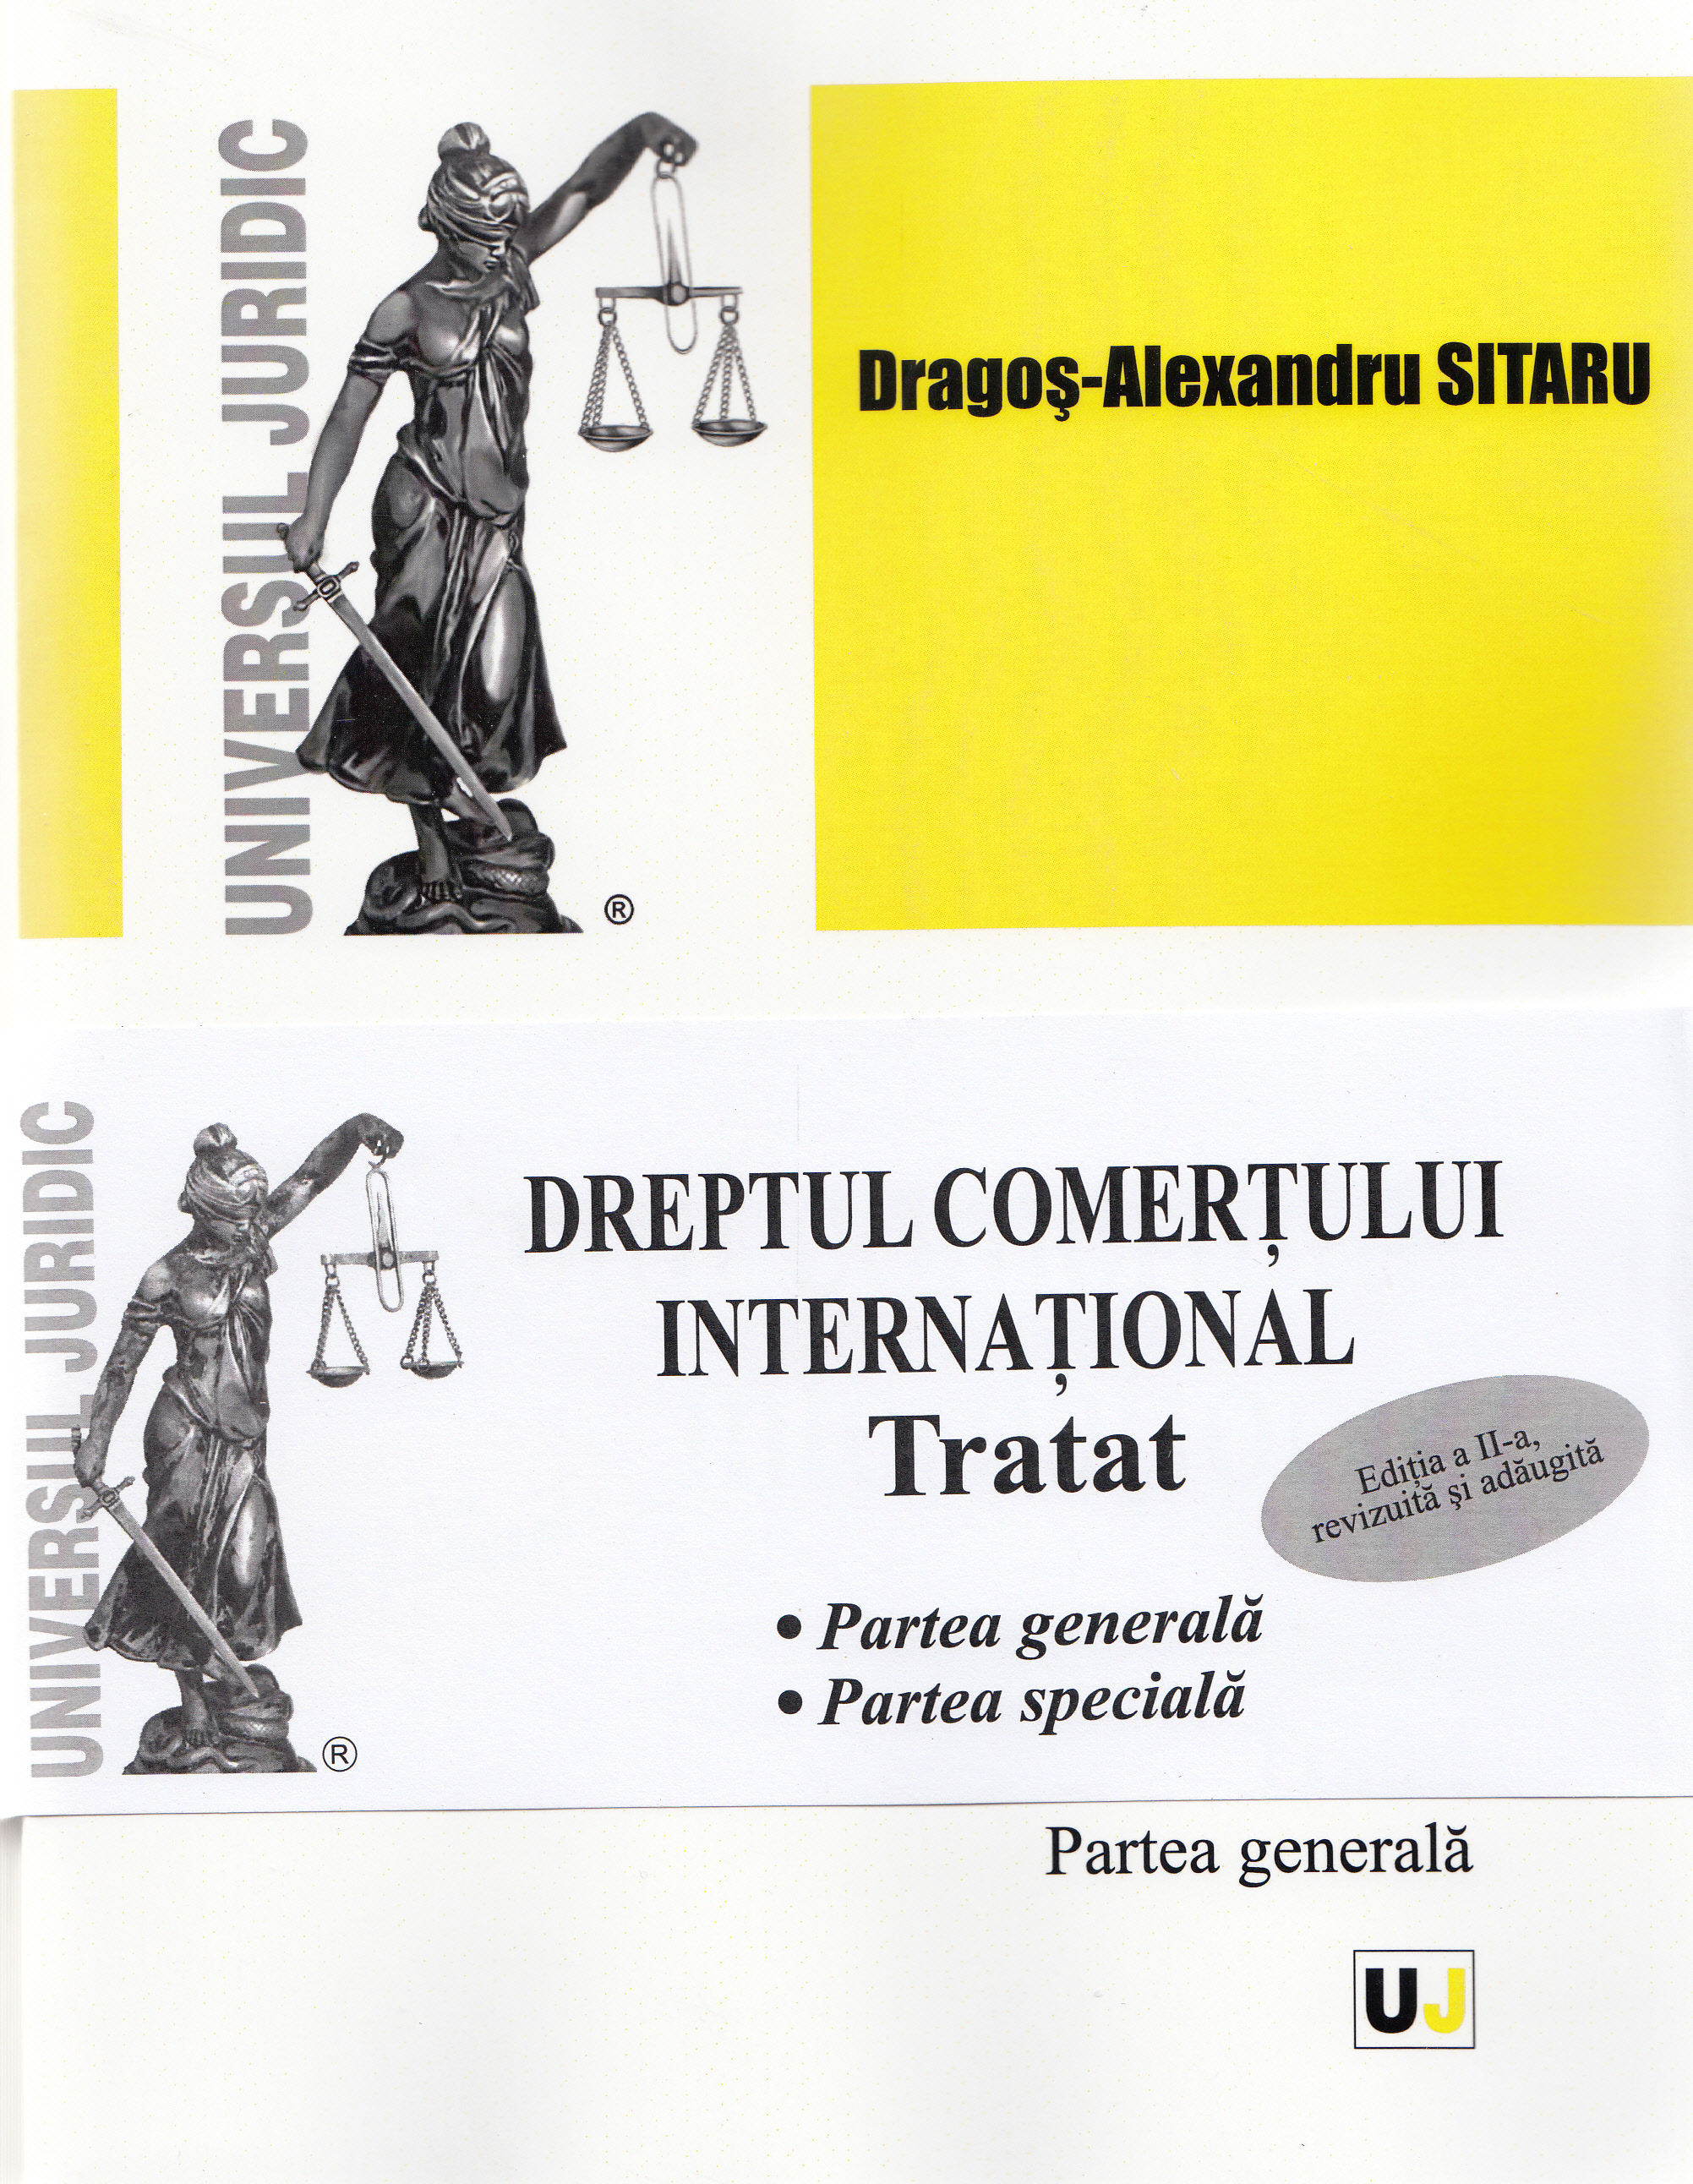 Dreptul comertului international. Tratat. Partea generala + Partea speciala Ed. 2  - Dragos-Alexandru Sitaru